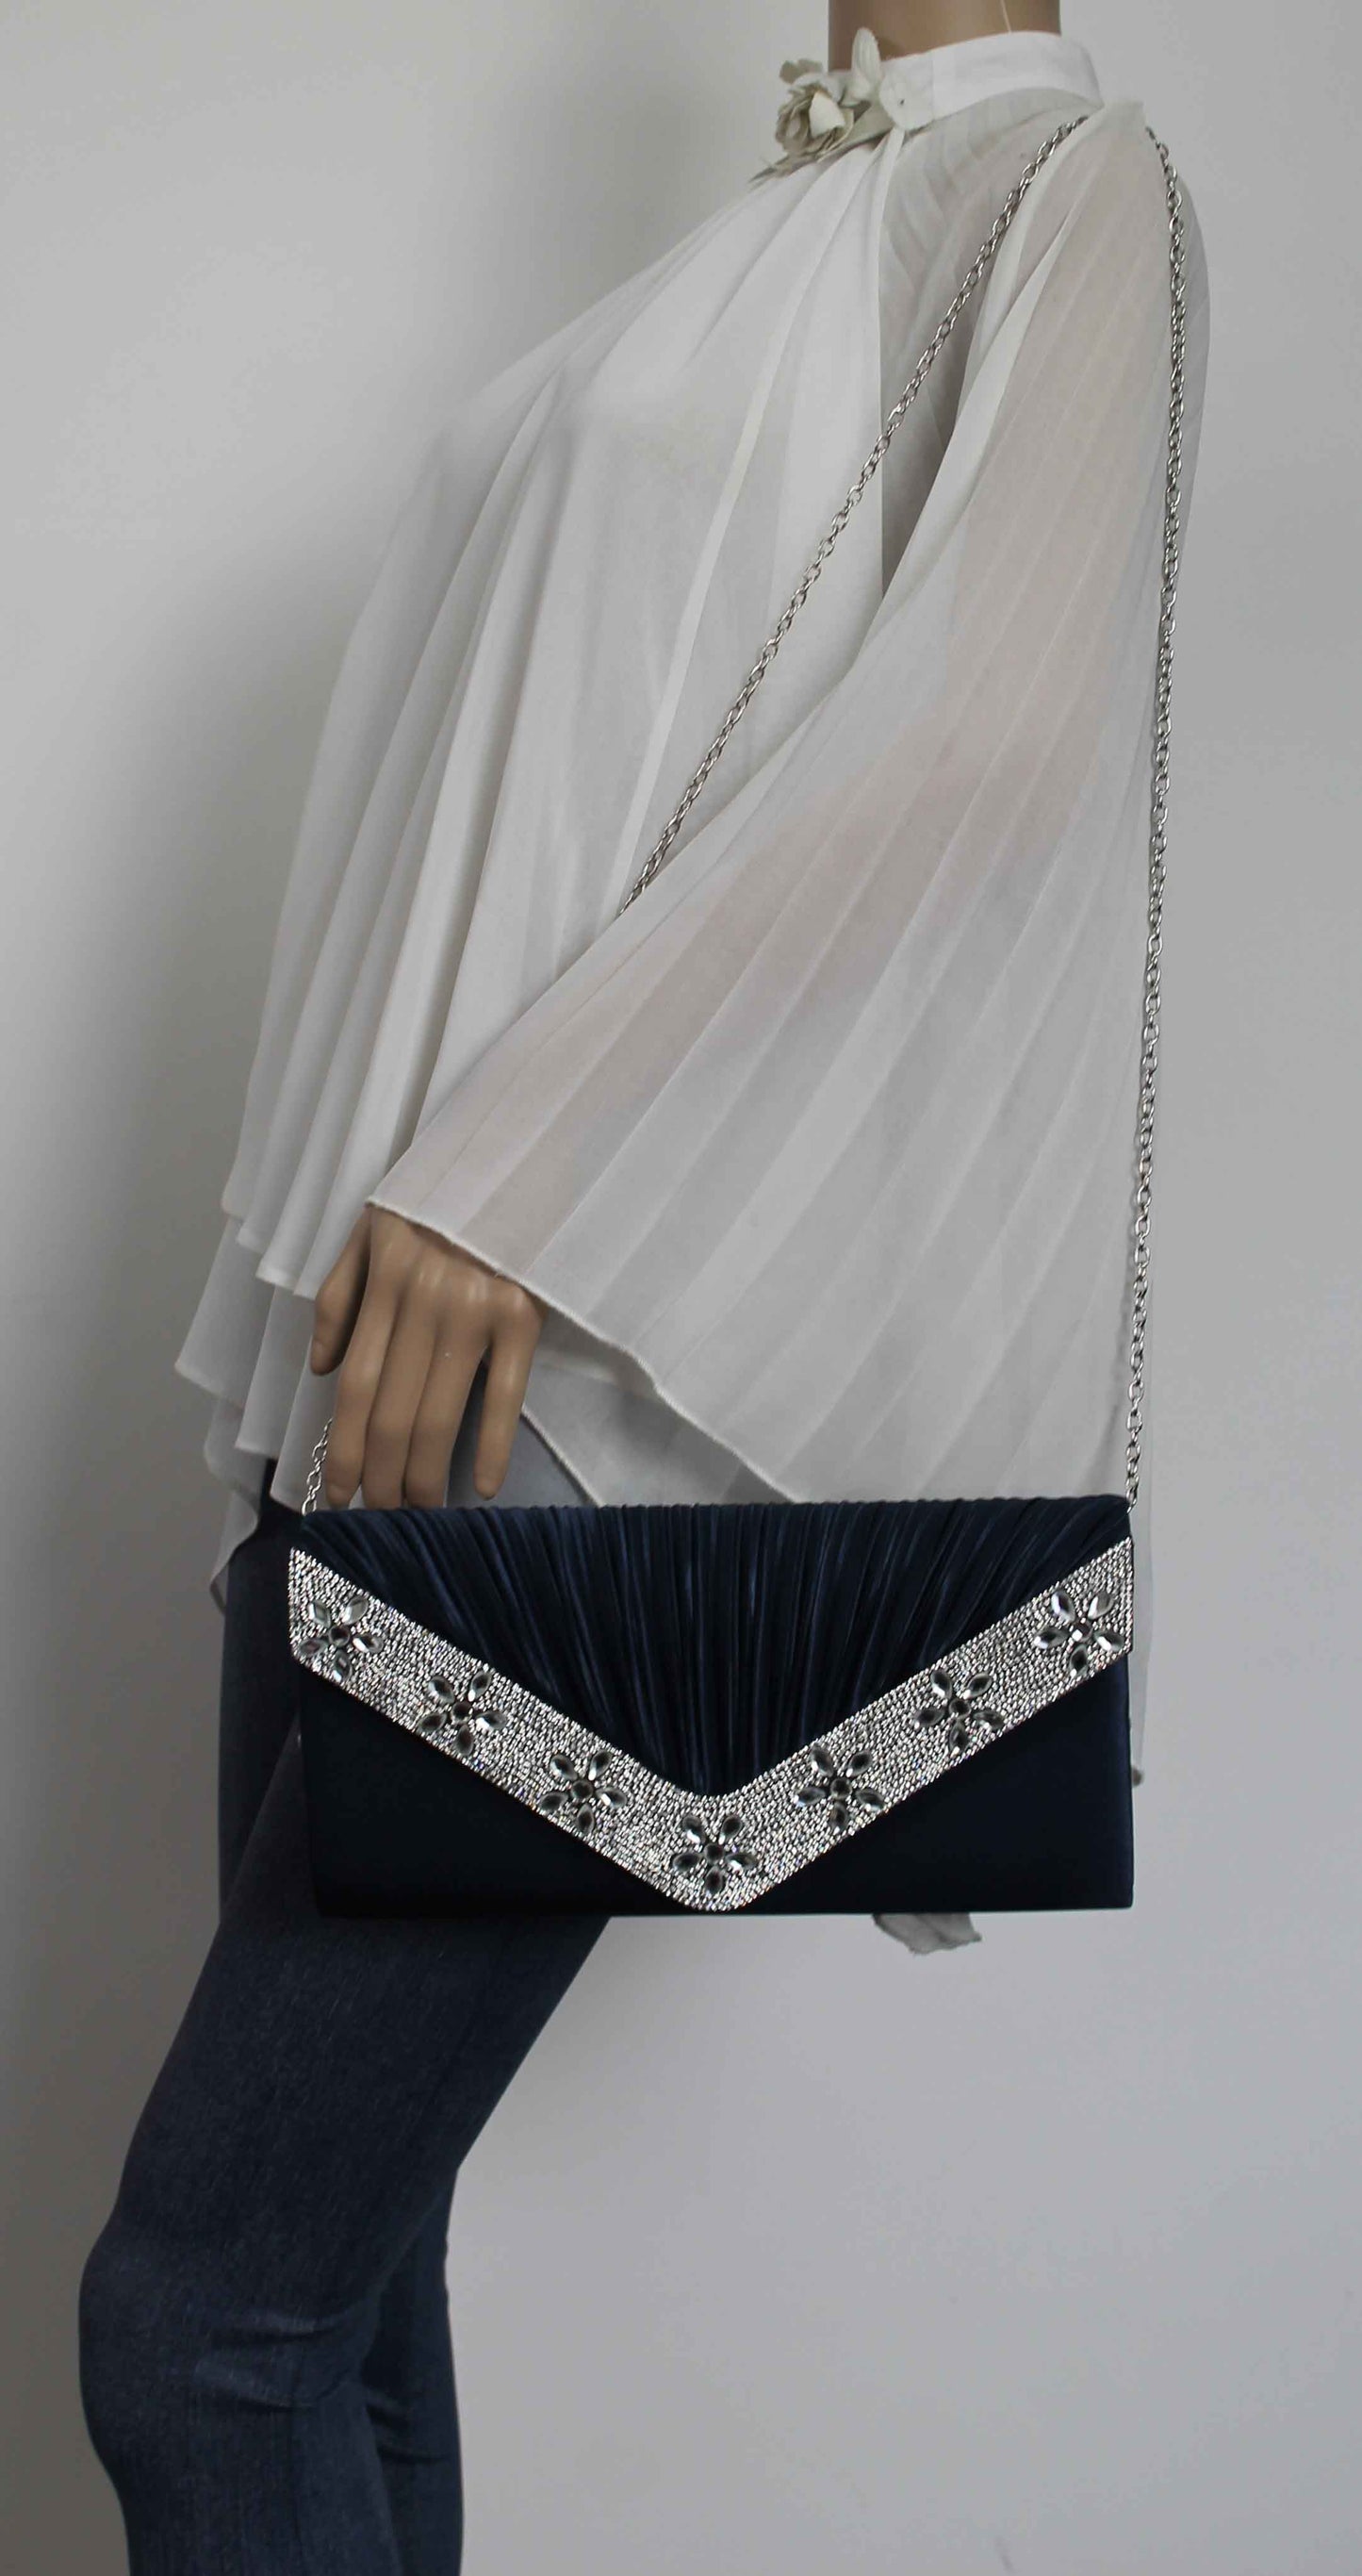 SWANKYSWANS Rylie Floral Diamante Clutch Bag Navy Cute Cheap Clutch Bag For Weddings School and Work